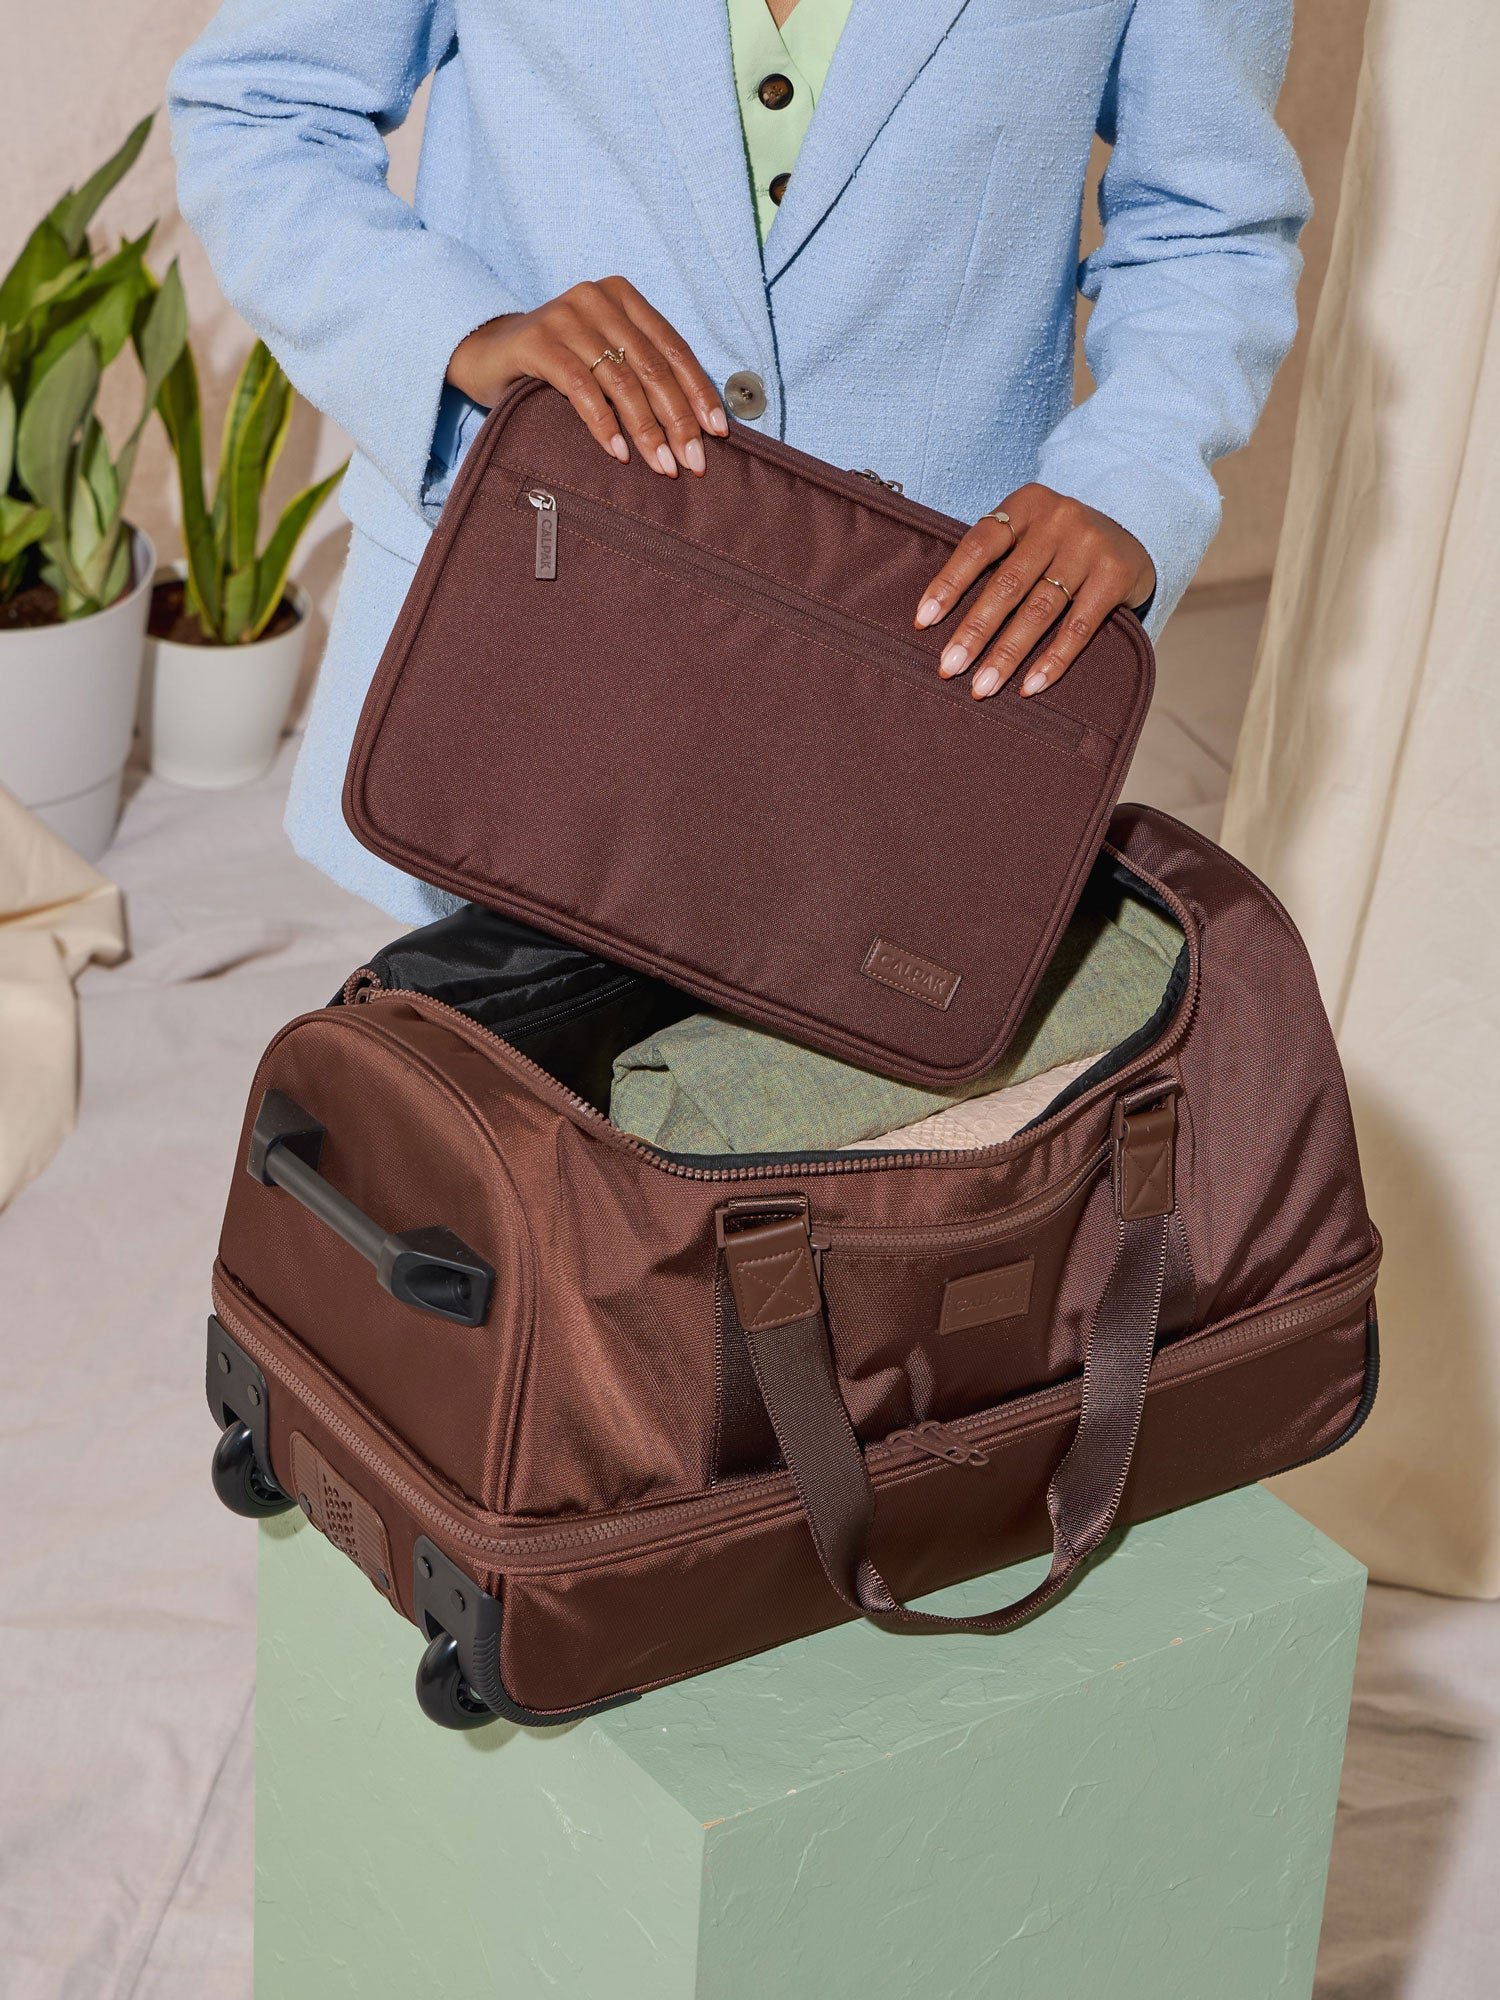 Model packing laptop case in CALPAK Stevyn Rolling Duffel bag with dual handles in walnut brown